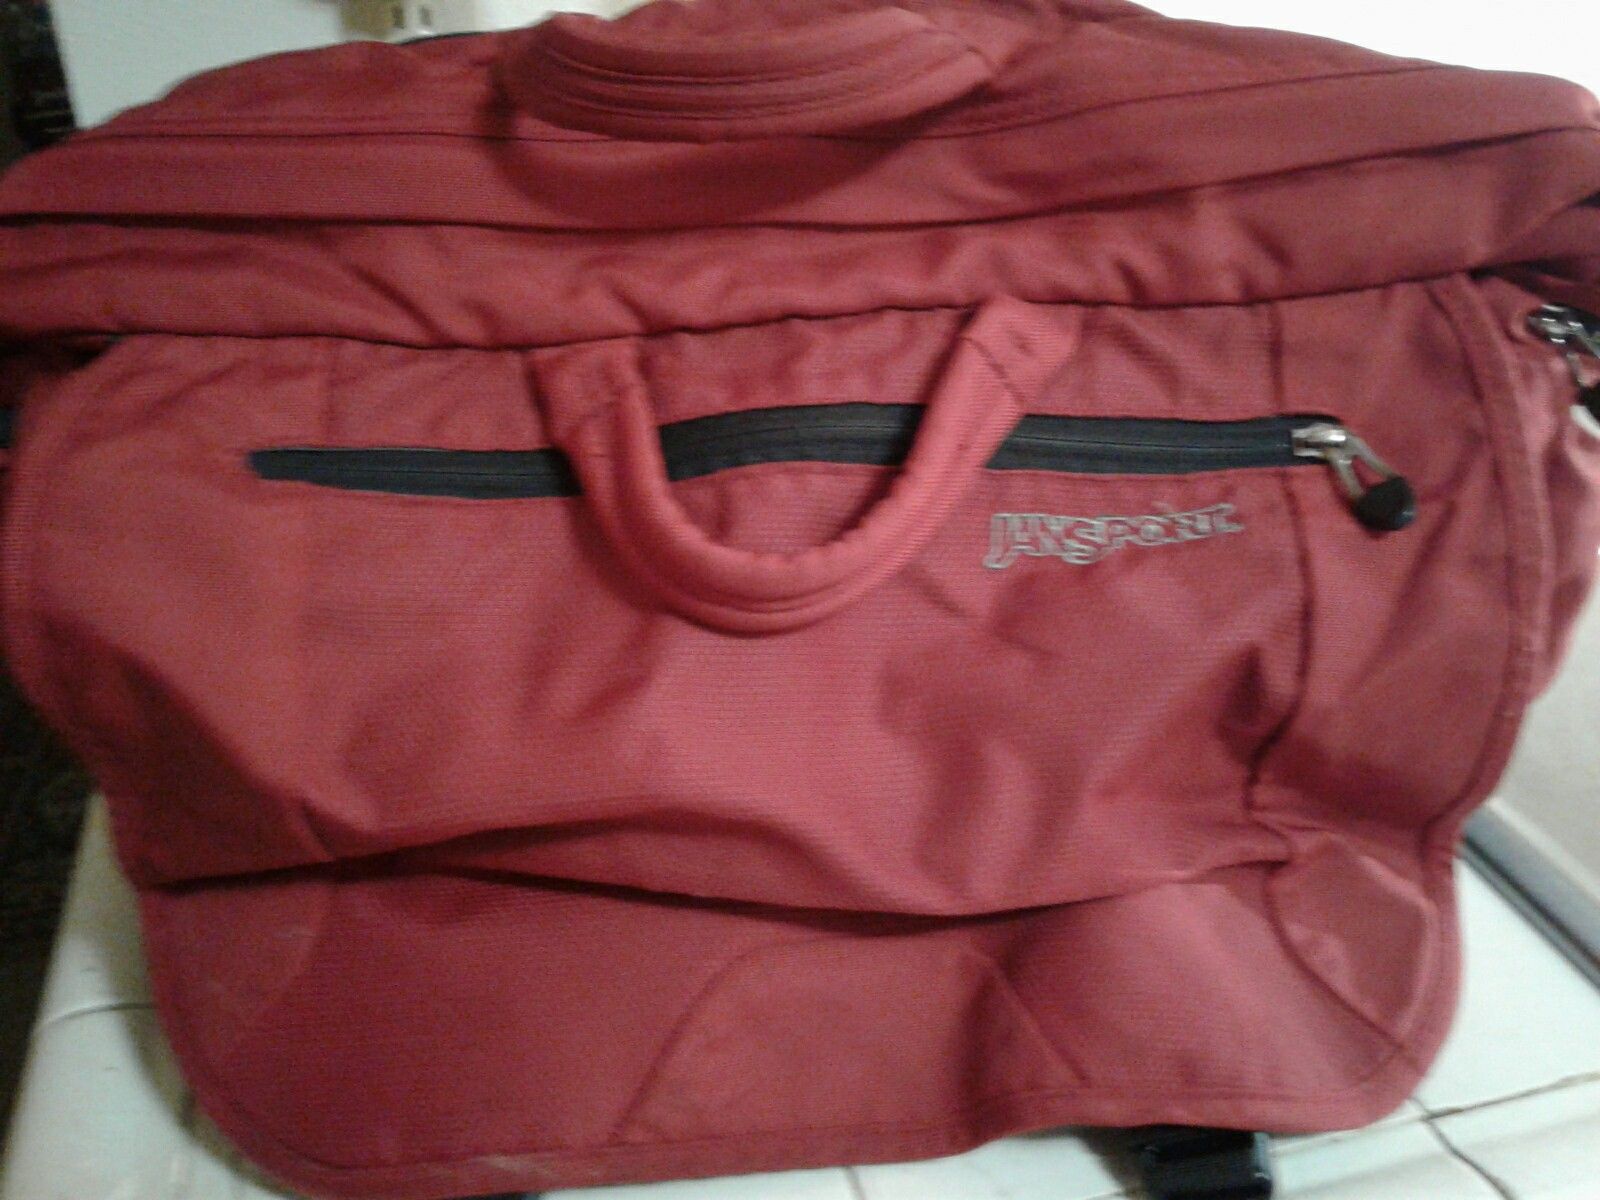 $5 !!! for Jansport bag good condition !